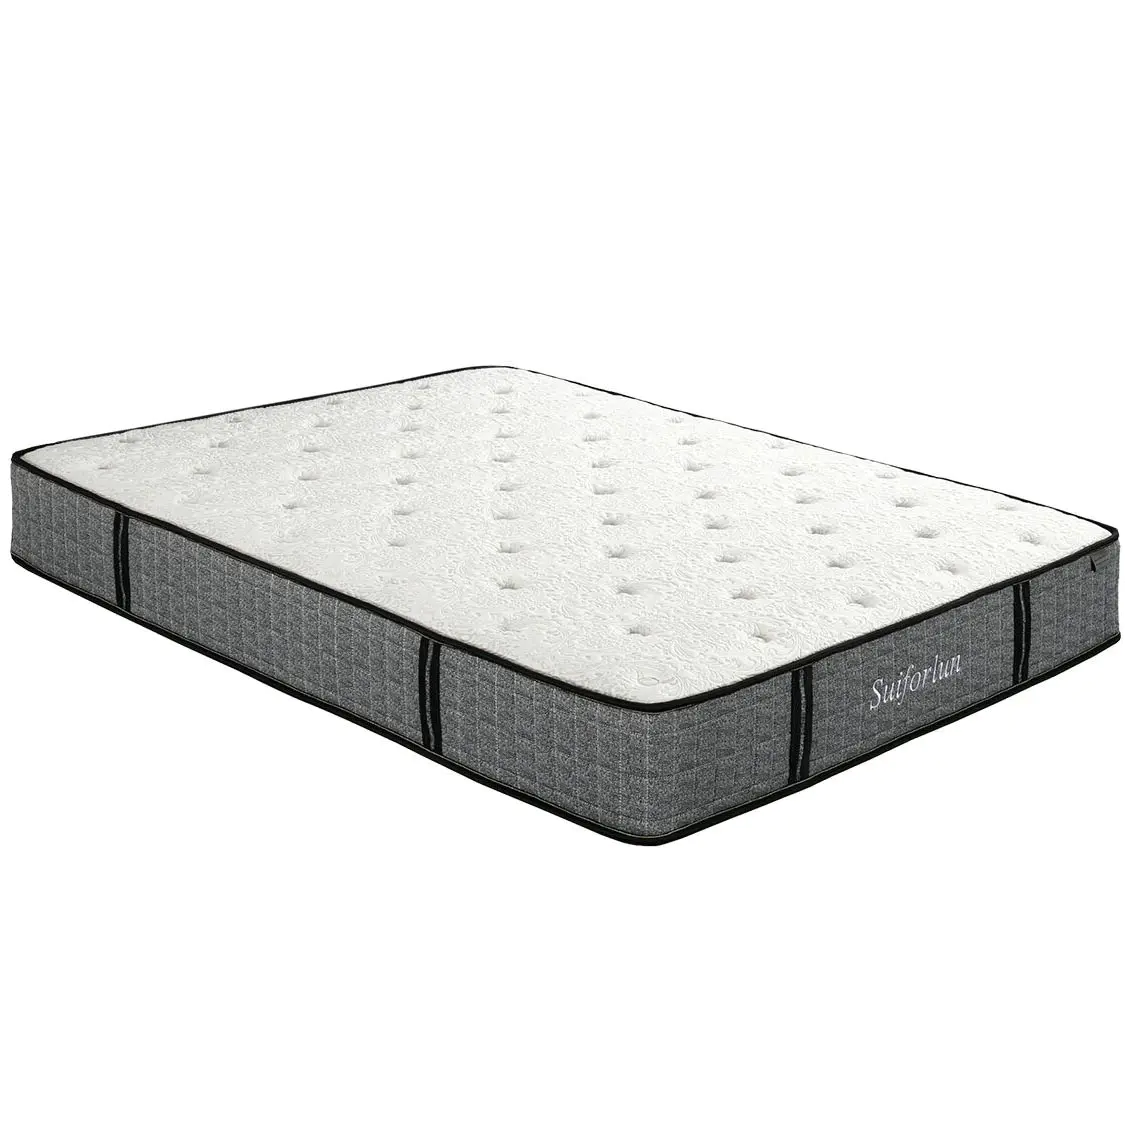 Suiforlun mattress Brand 14 spring custom full size hybrid mattress